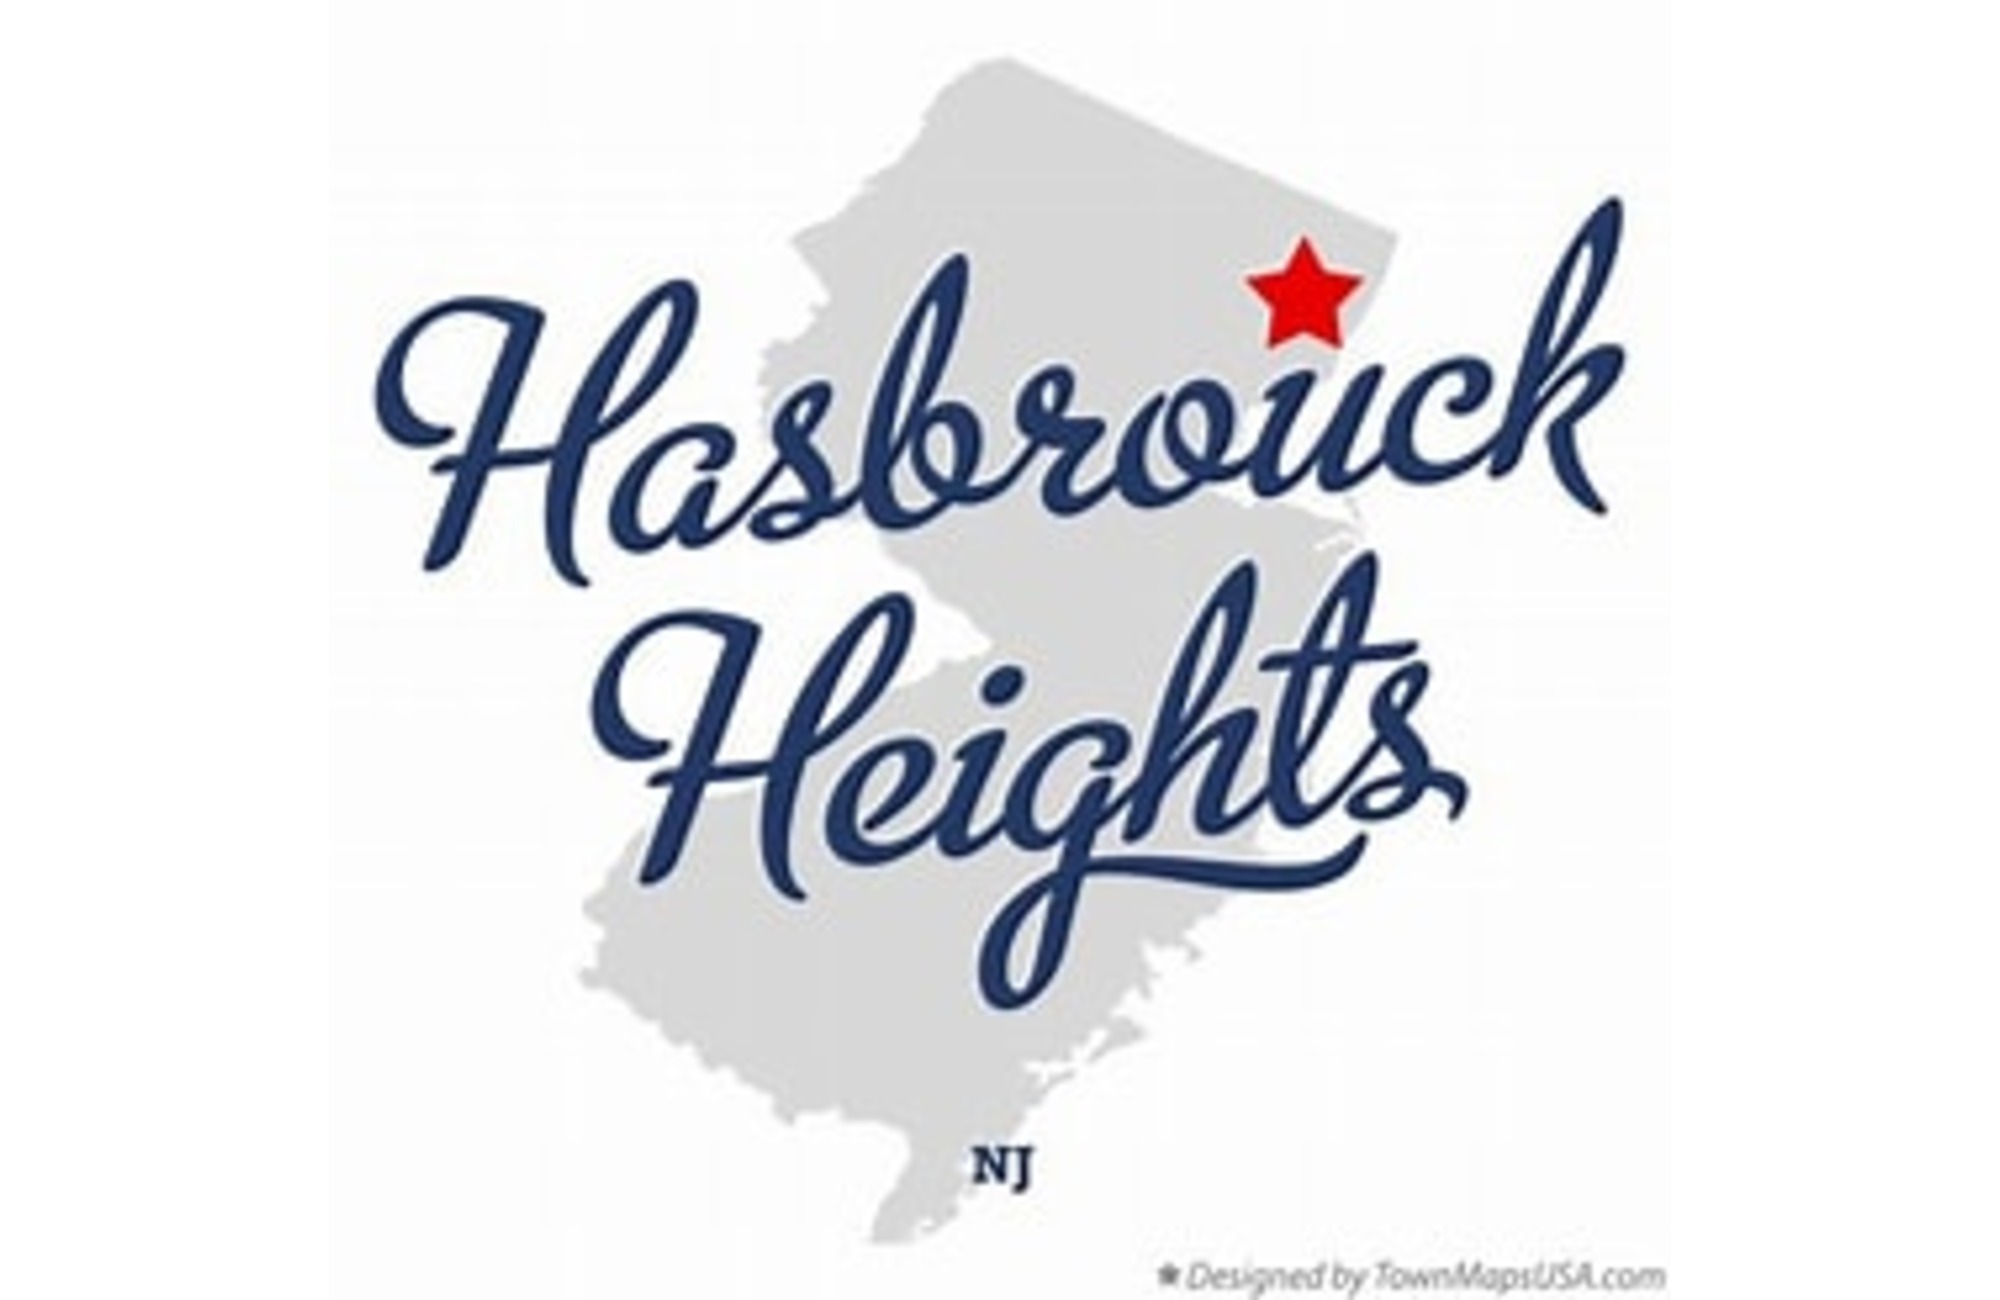 Hasbrouck Heights